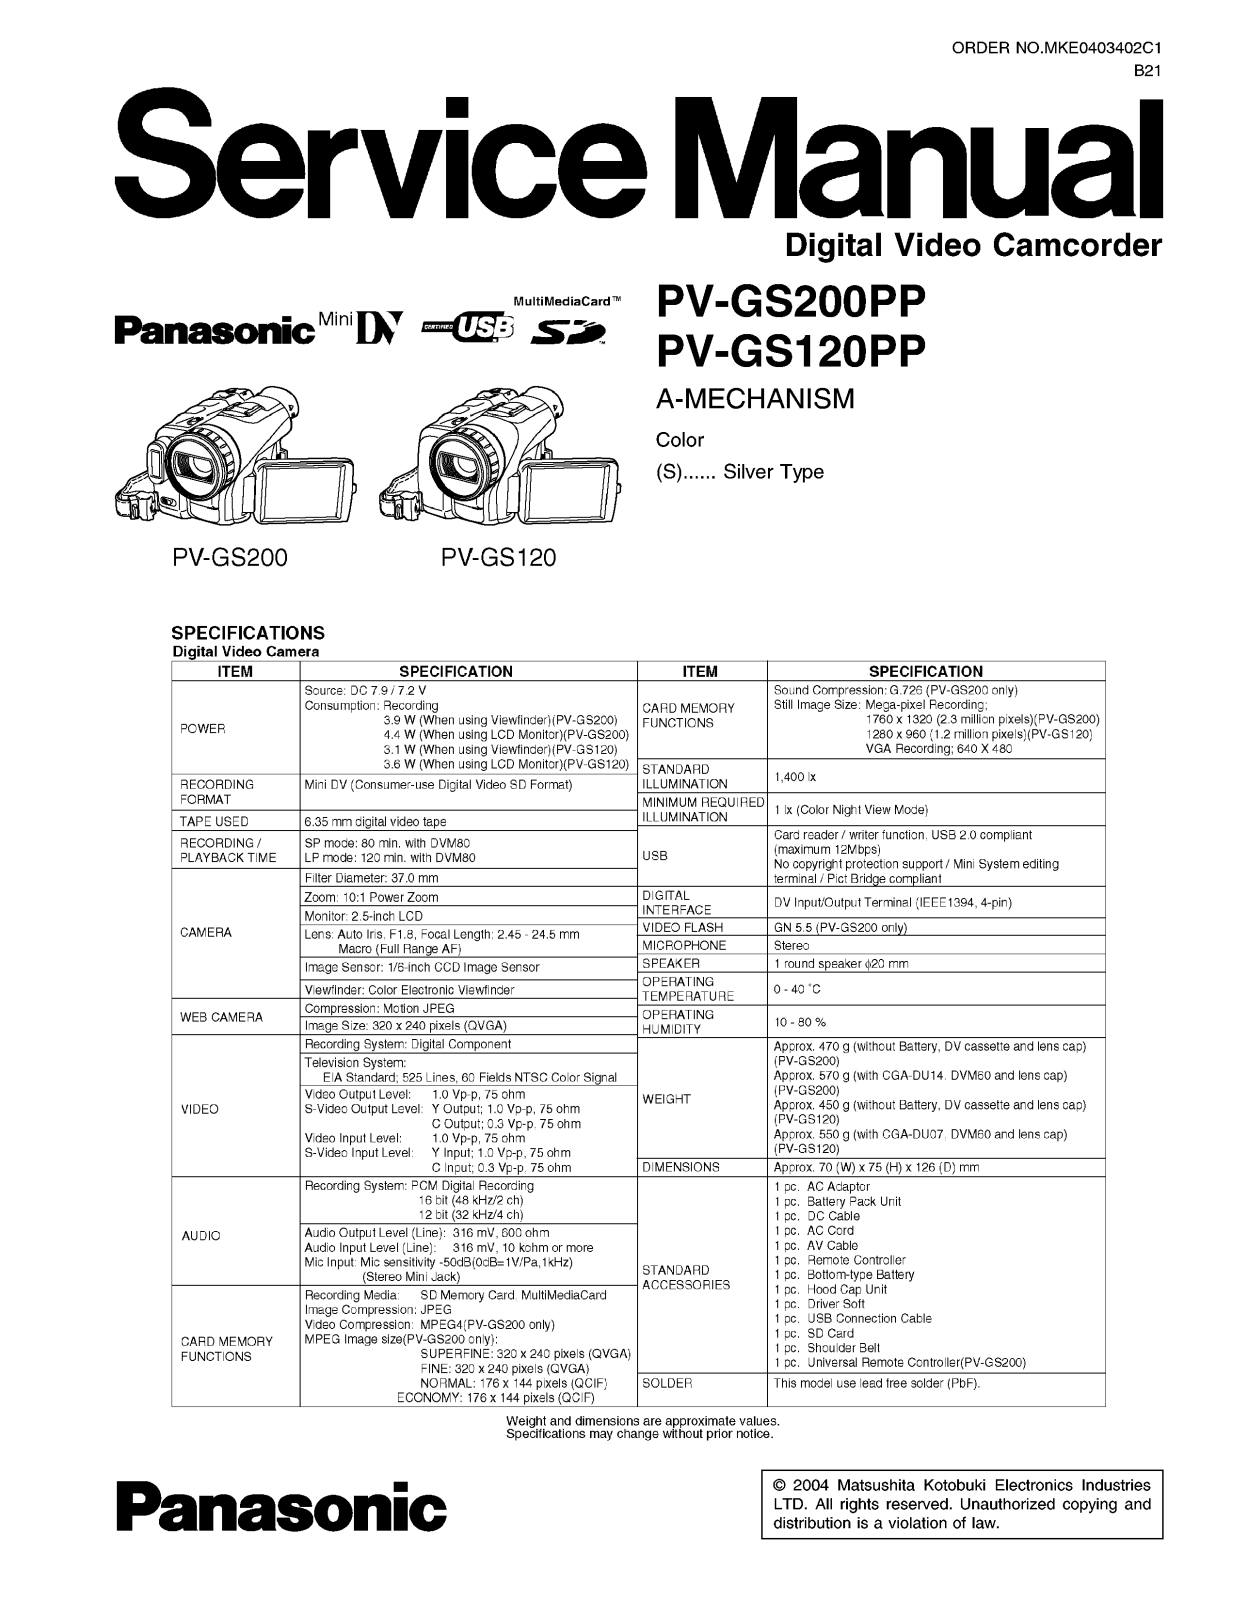 Panasonic PV-GS120 PP Service Manual